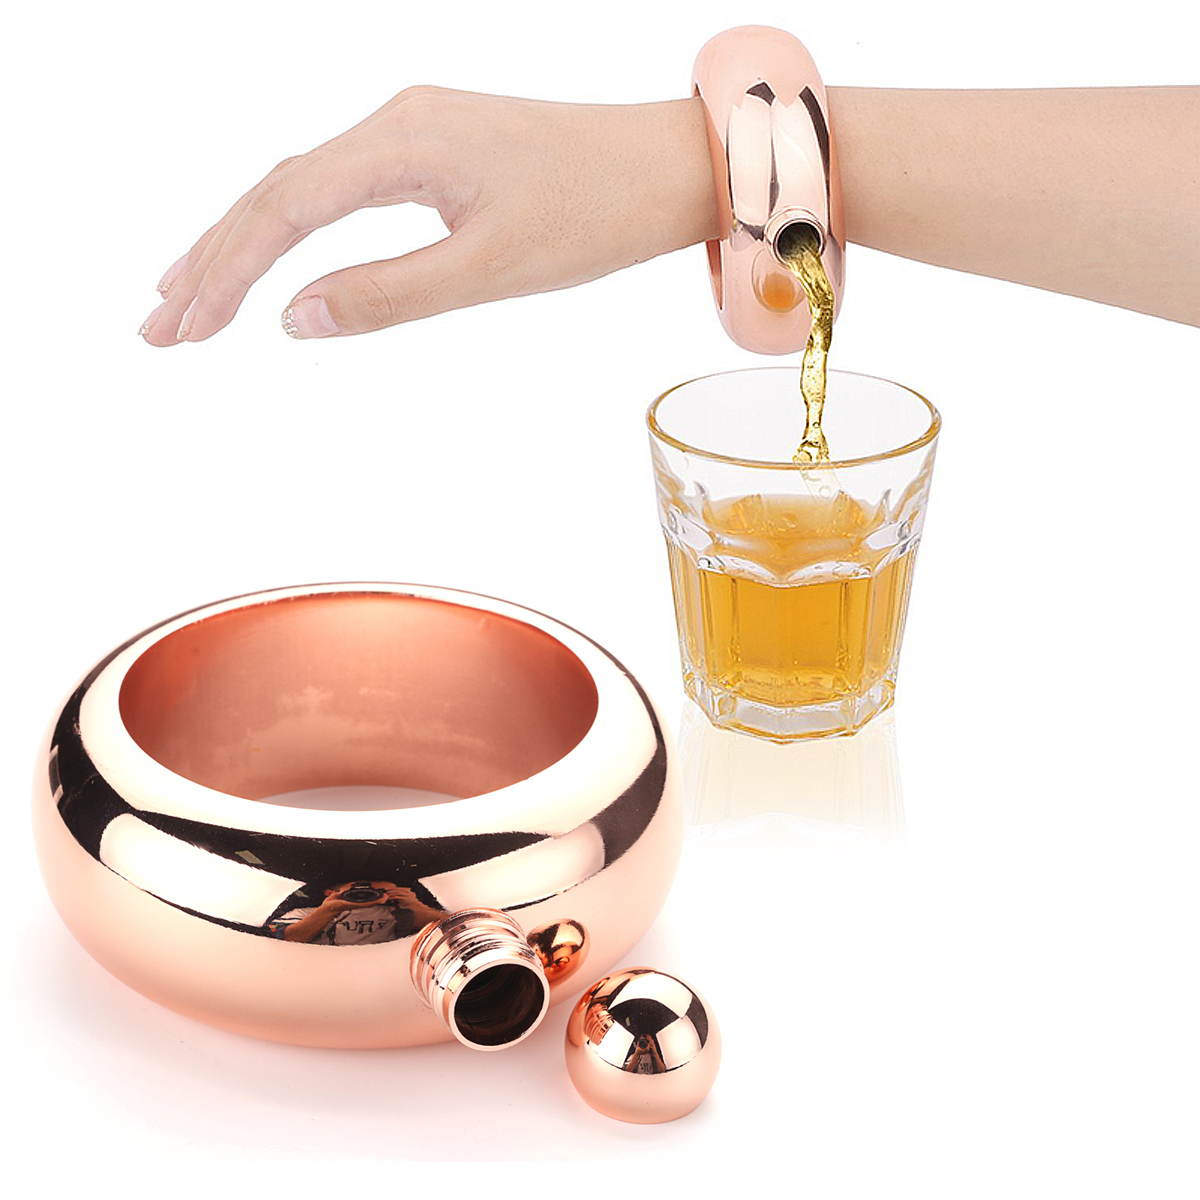 Bracelet-Bangle-Flask-Drinking-Stainless-Steel-Whiskey-Hidden-Hip-Flasket-Jewelry-Gadget-1235443-6